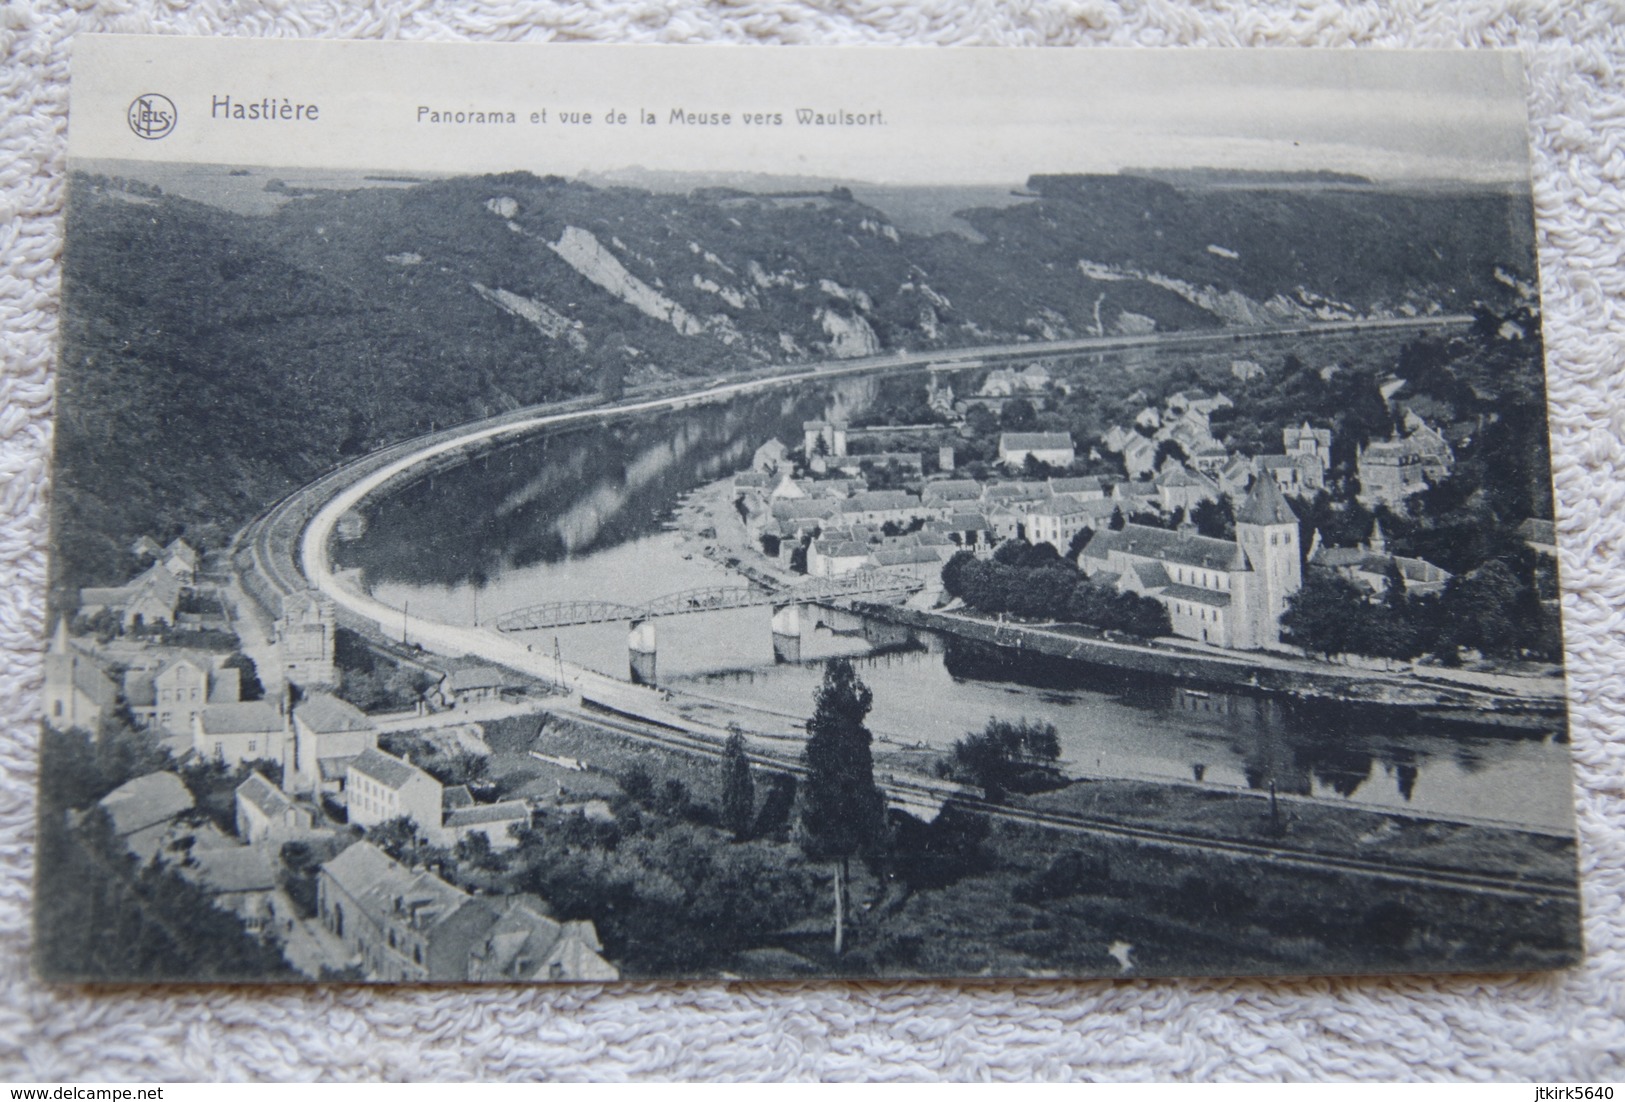 Hastière "Panorama Et Vue De La Meuse Vers Waulsort" - Hastière